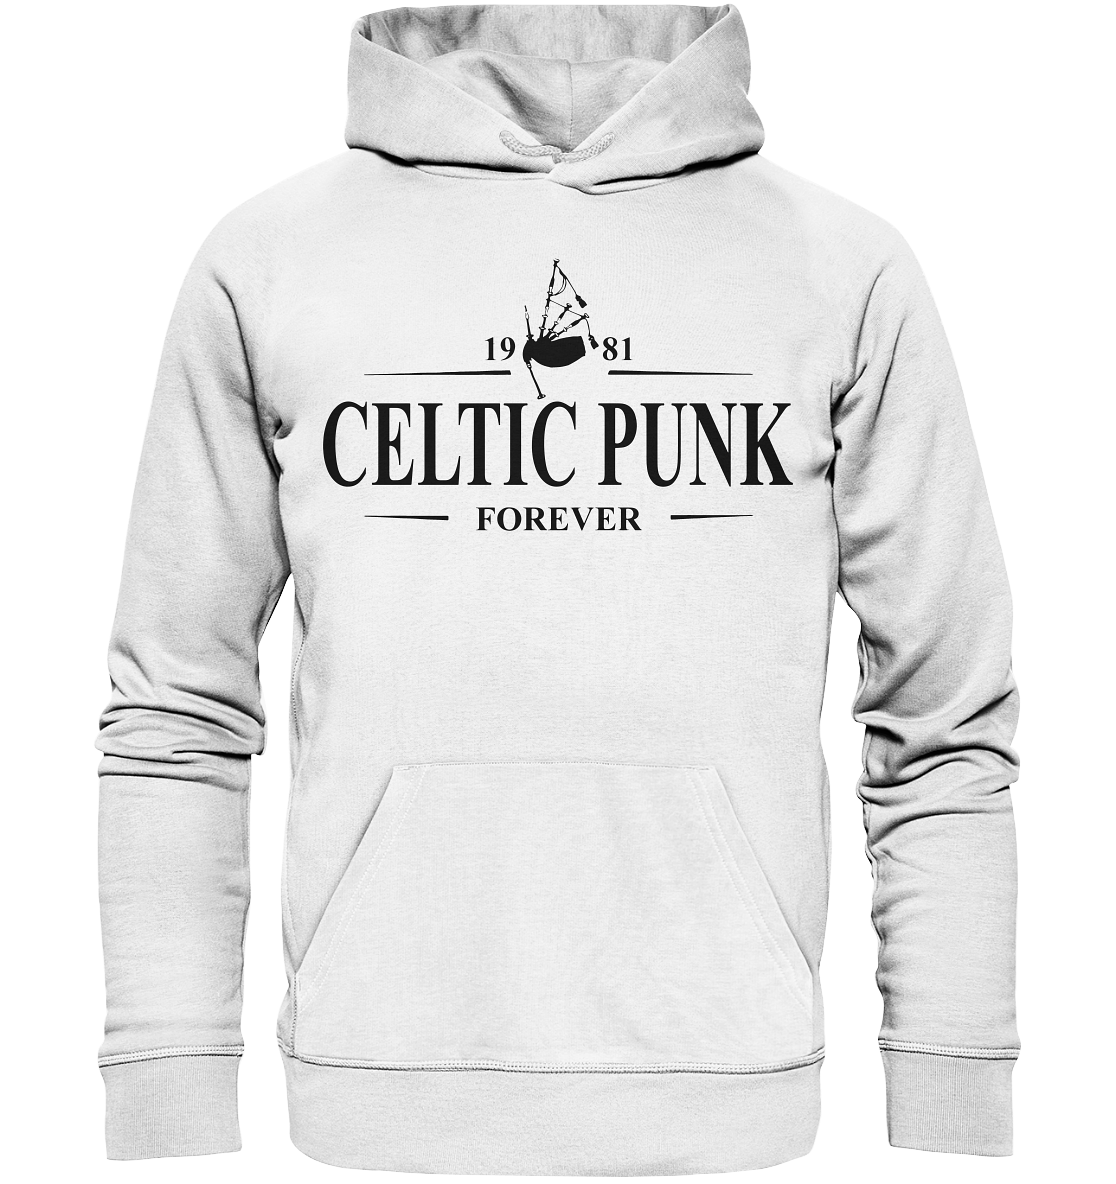 Celtic Punk "Forever" - Organic Hoodie